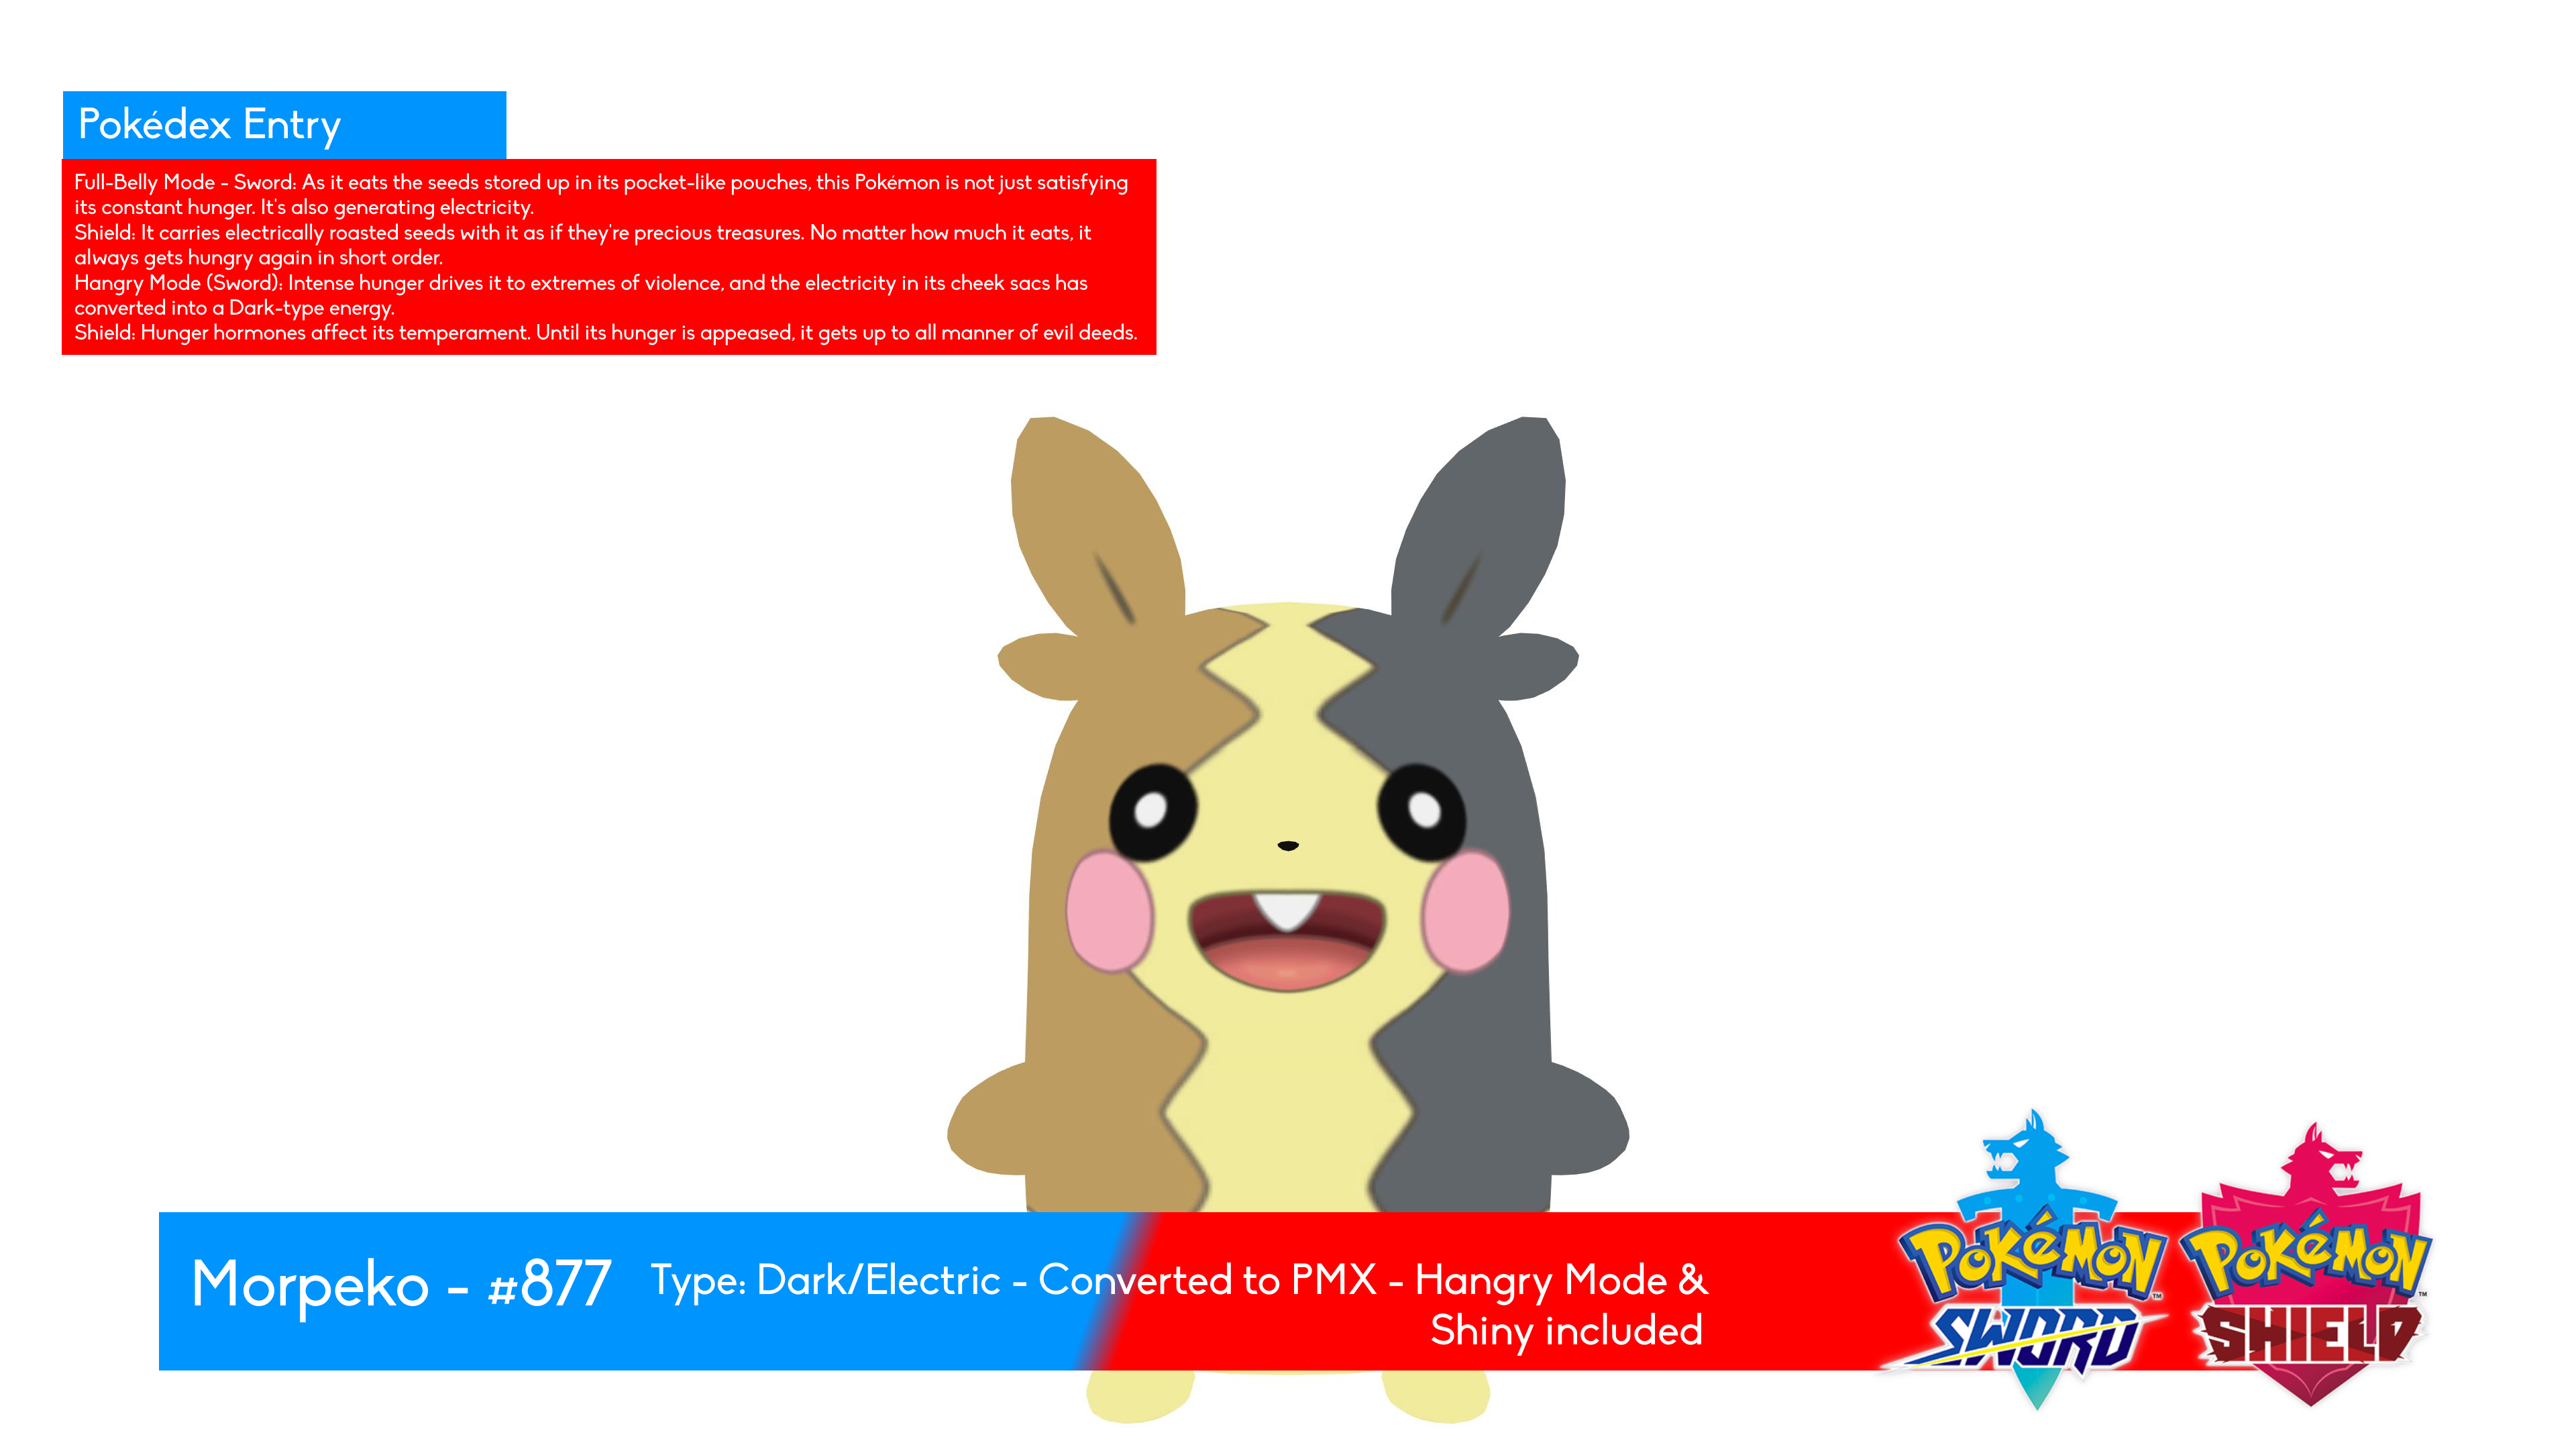 Pokemon MMD - BD/SP Chibi Models Pack #1: Download by Pikapika